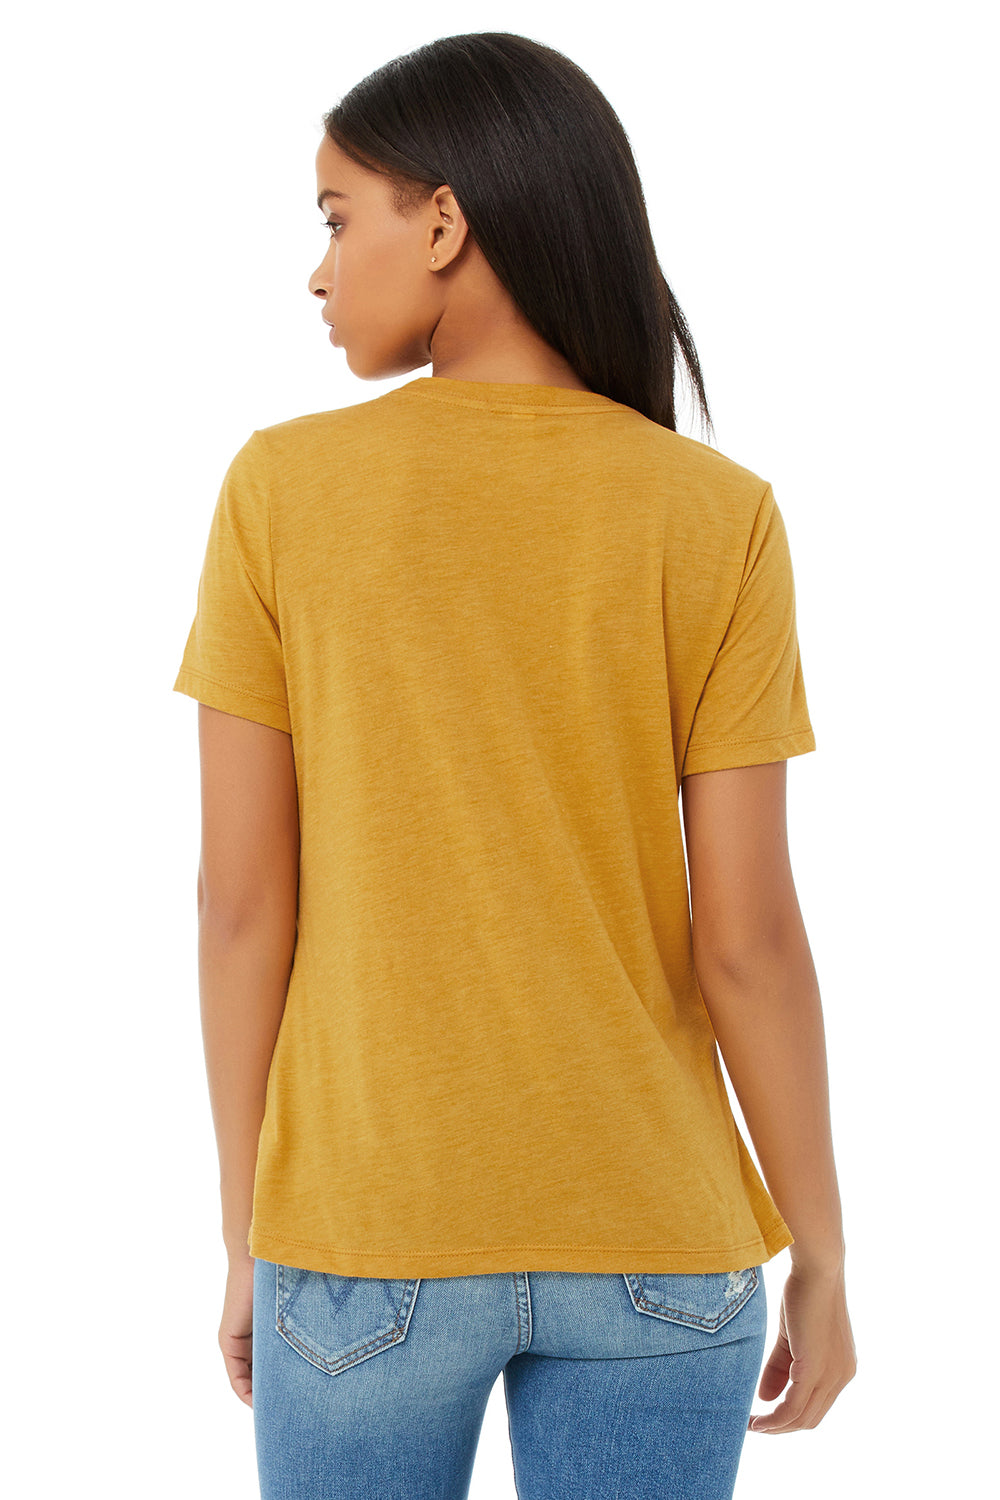 Bella + Canvas BC6413 Womens Short Sleeve Crewneck T-Shirt Mustard Yellow Model Back